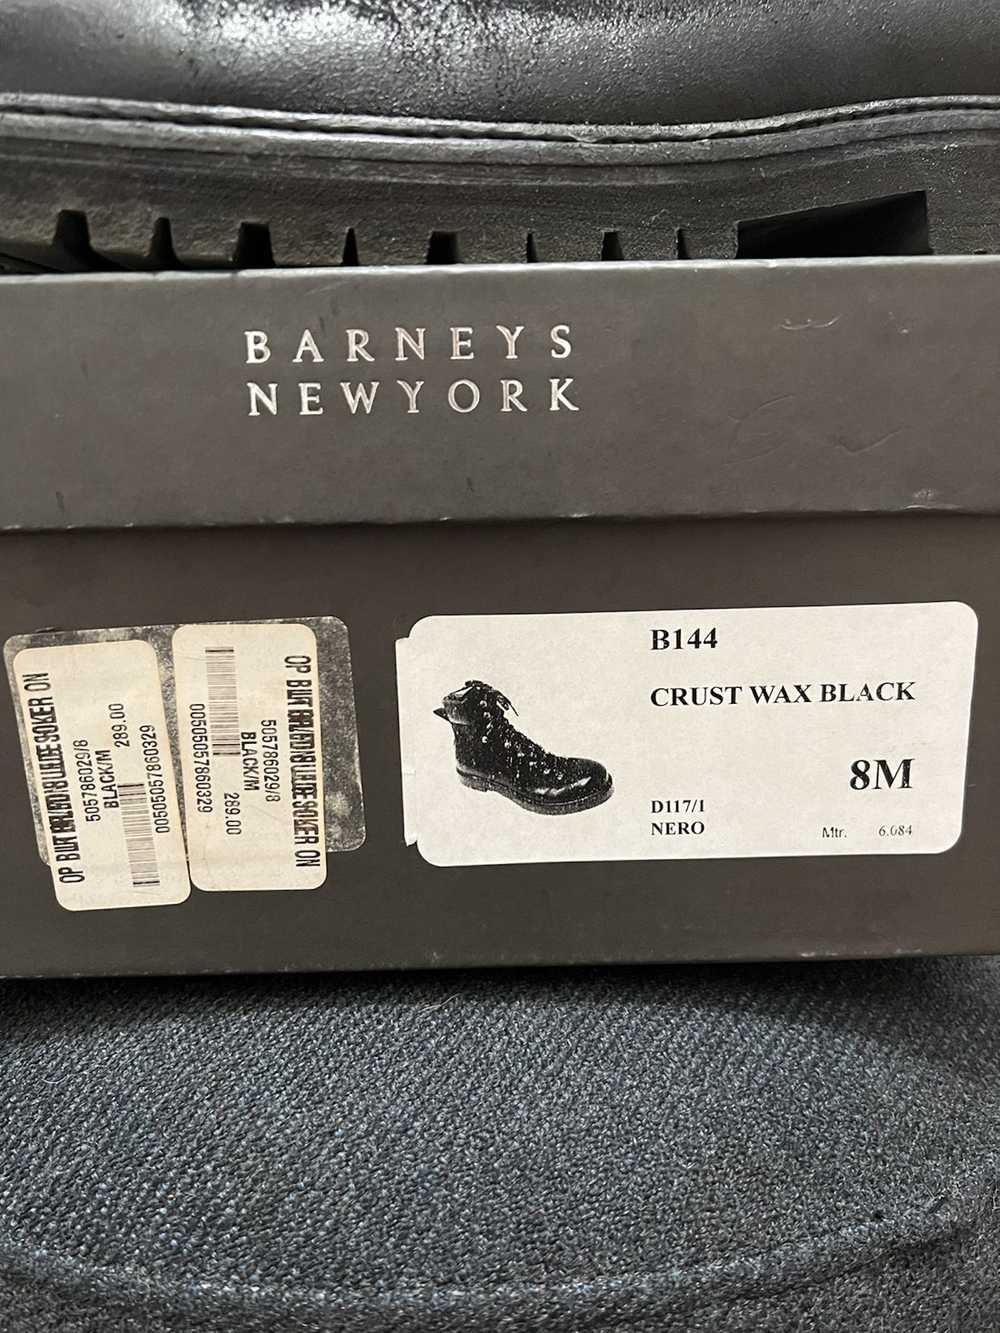 Barneys New York Vintage Barney’s New York Boots - image 8